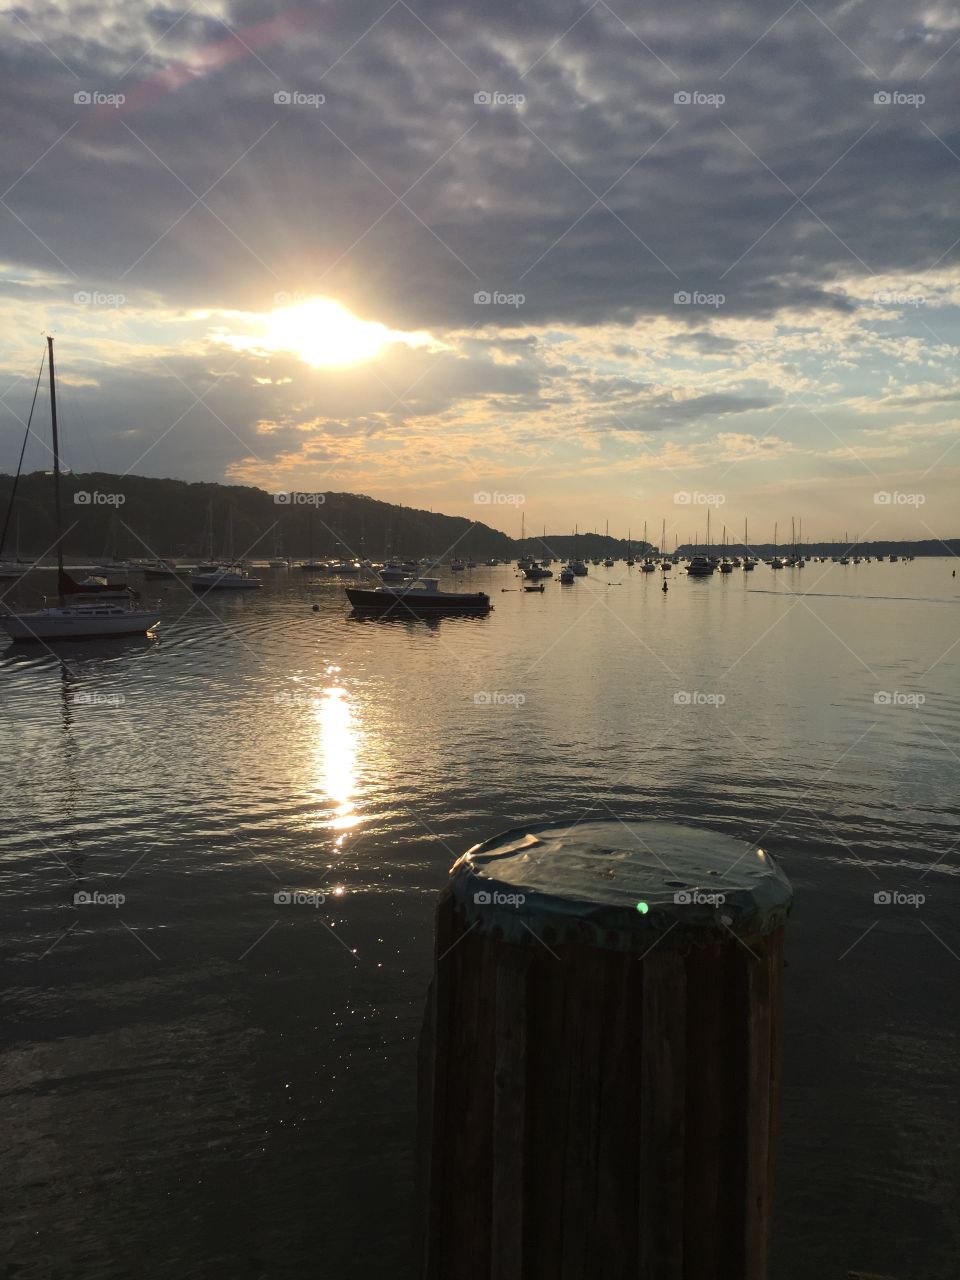 A Long Island sunset 